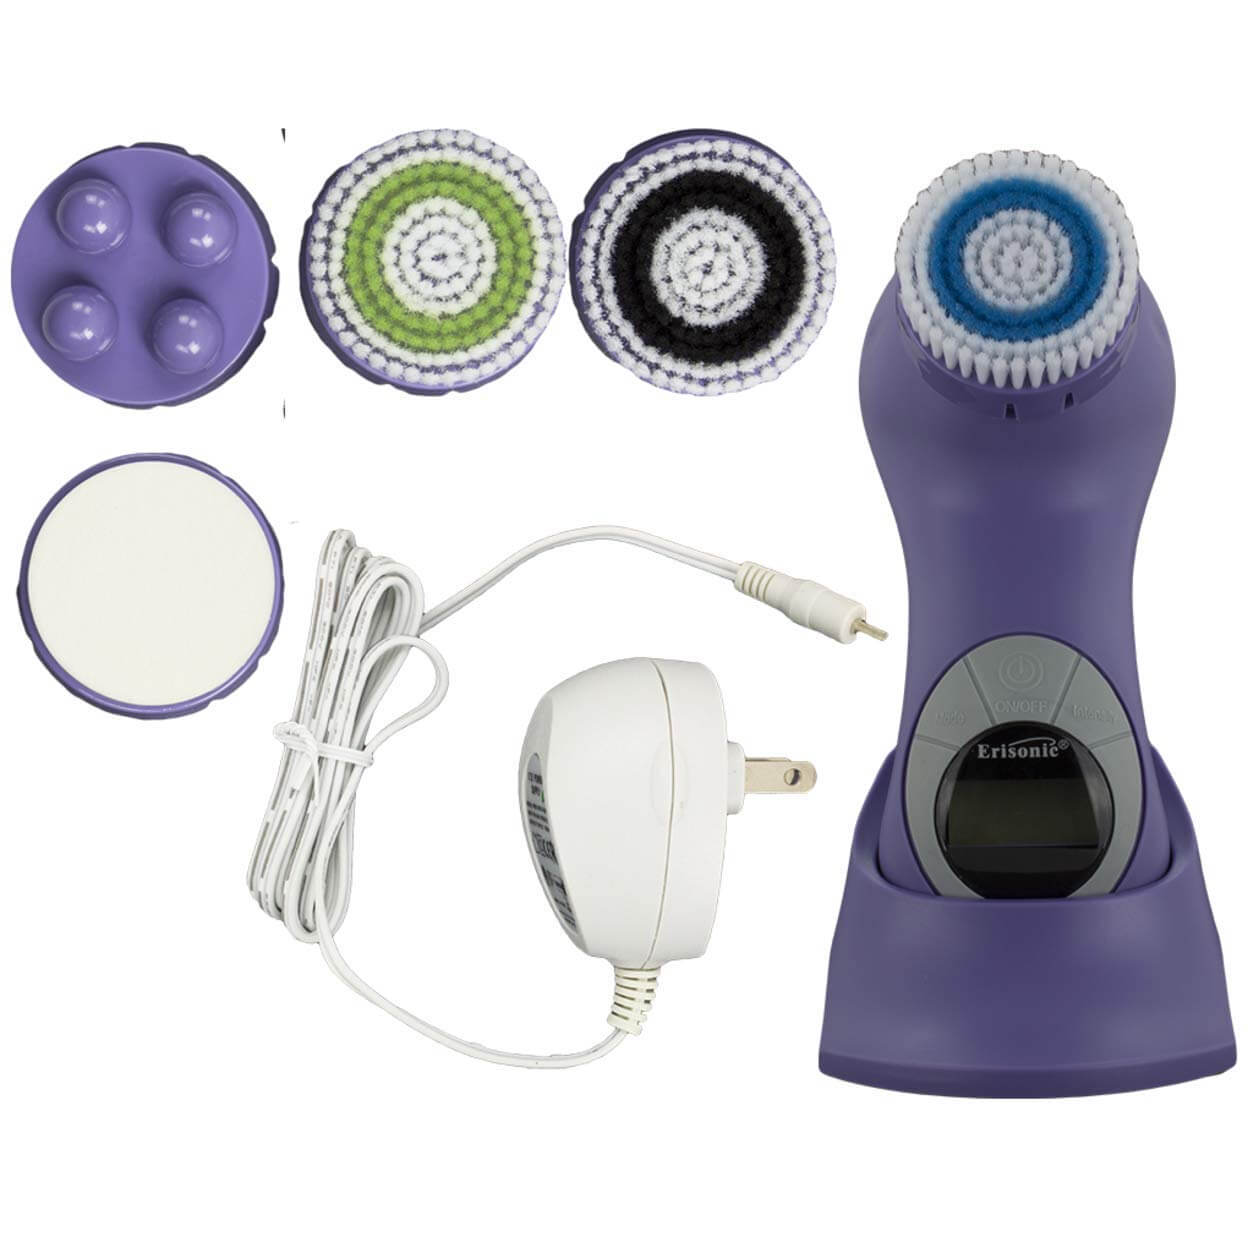 2016 Erisonic #1 Professional Skincare Face Cleansing Brush System - Dark Purple